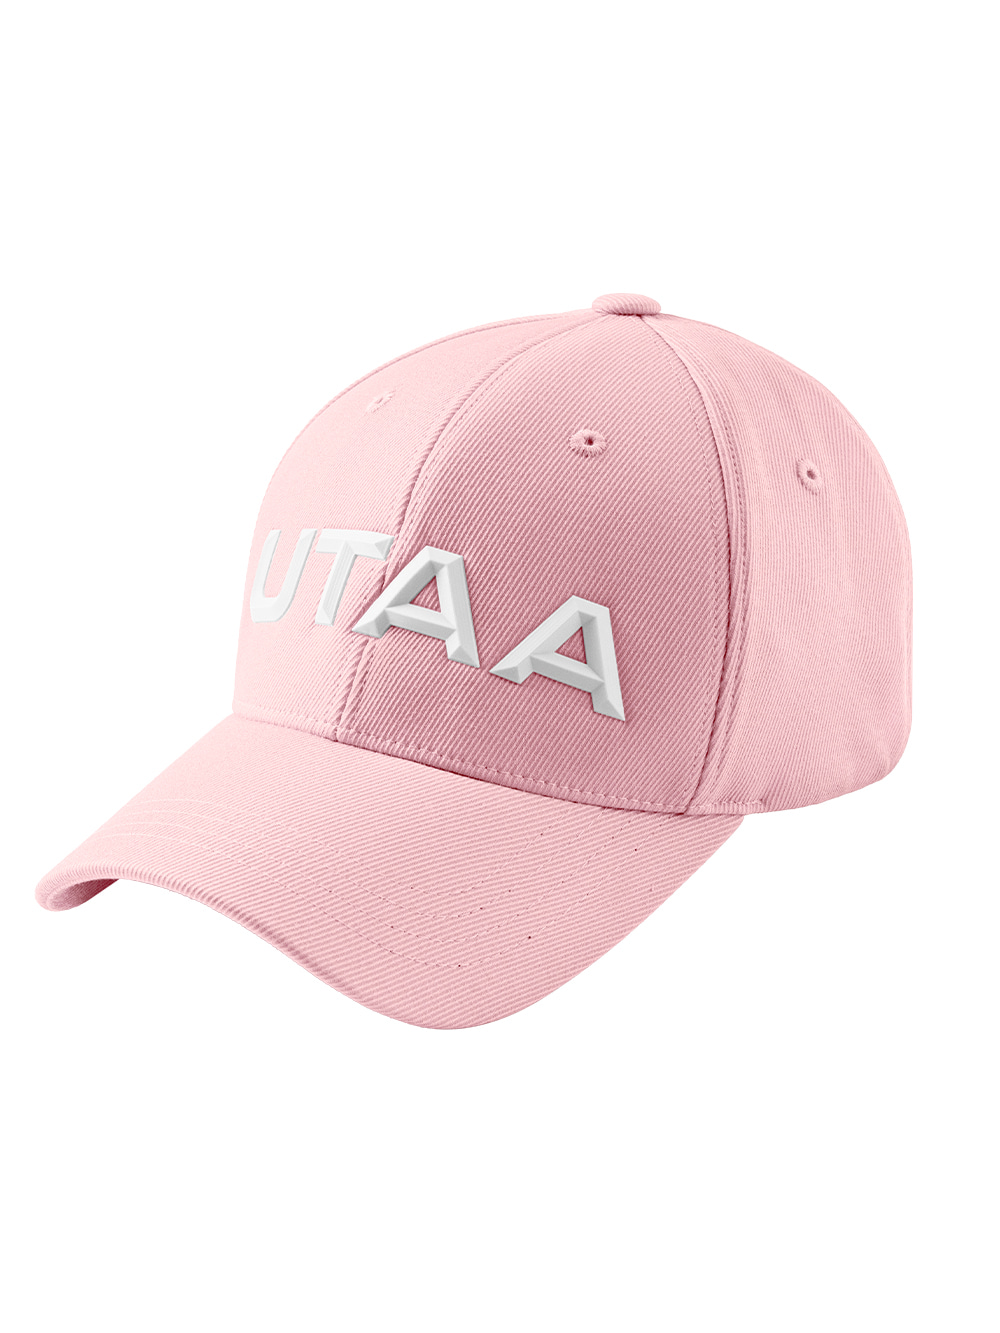 UTAA Figure Basic Cap : Light Pink  (UC0GCU100LP)